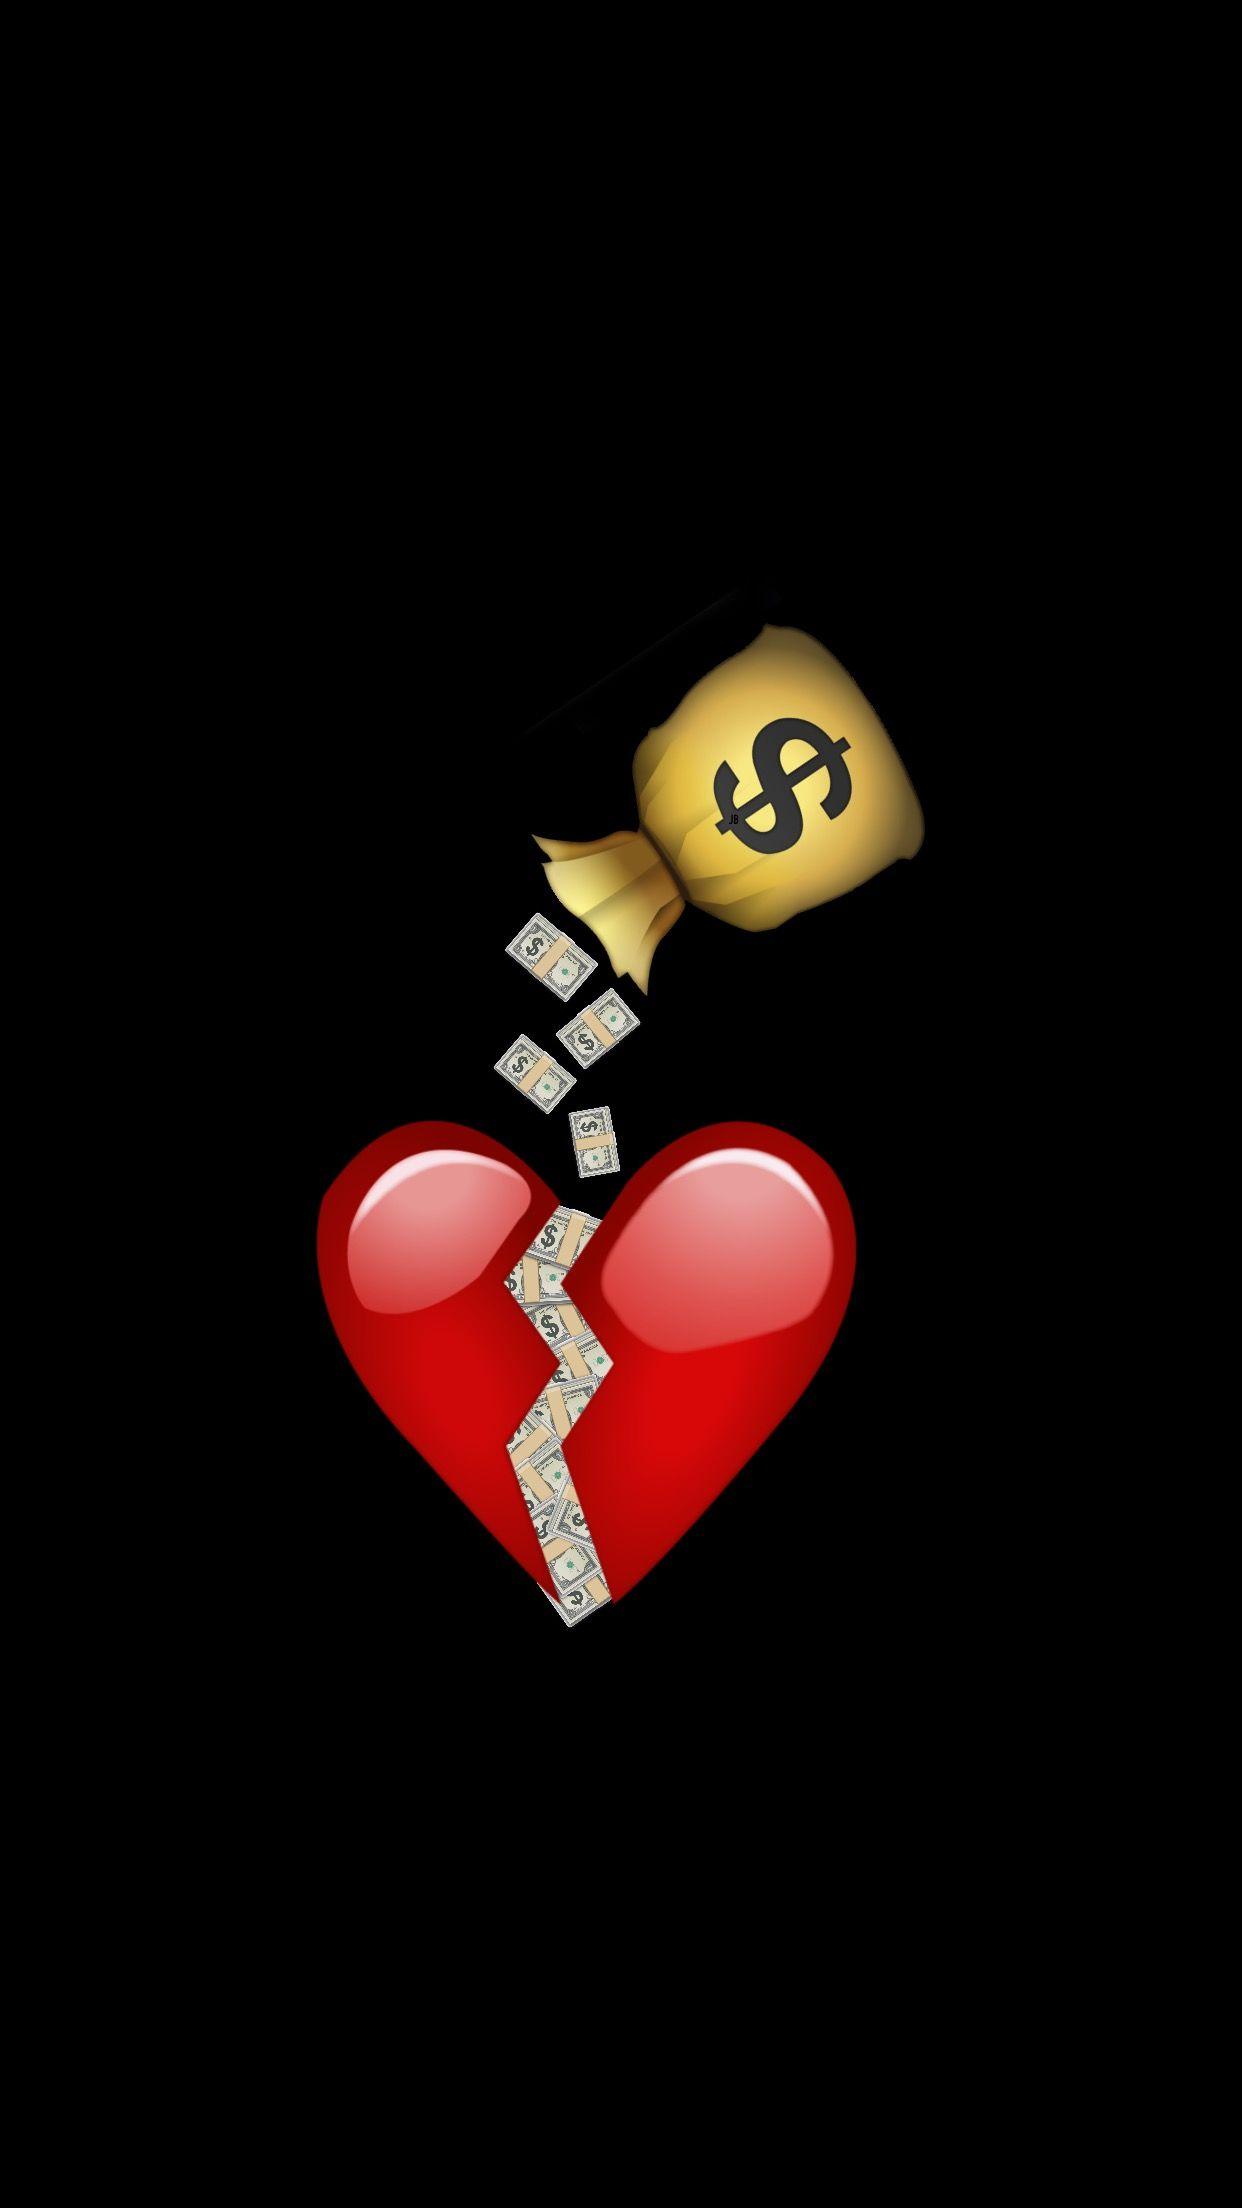 Put A Band Aid On A Broken Heart. Emoji Wallpaper